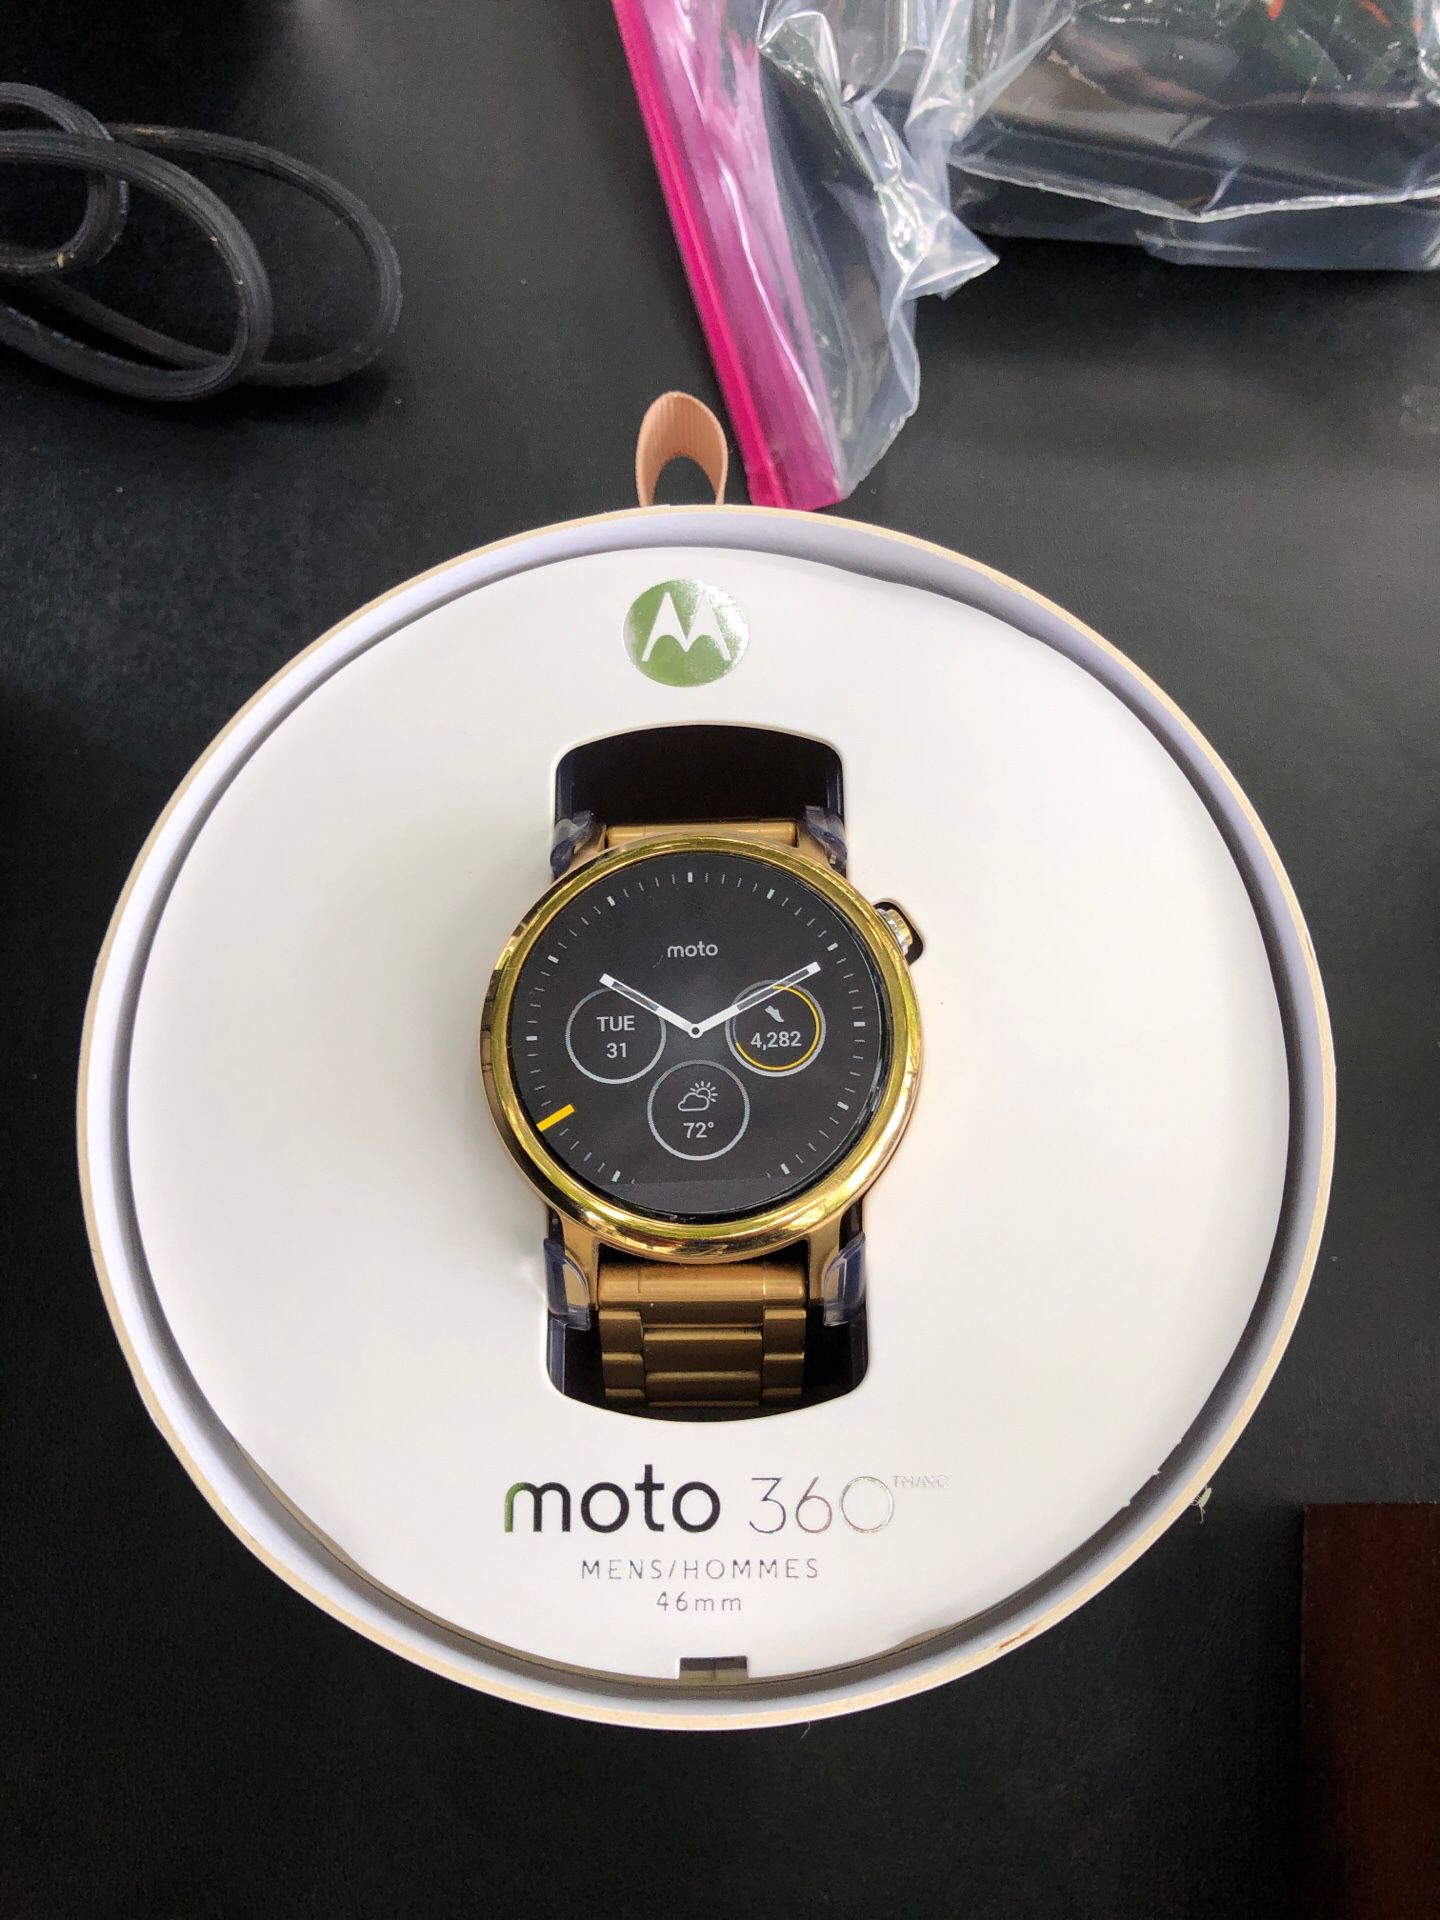 Motorola moto 360 smart watch